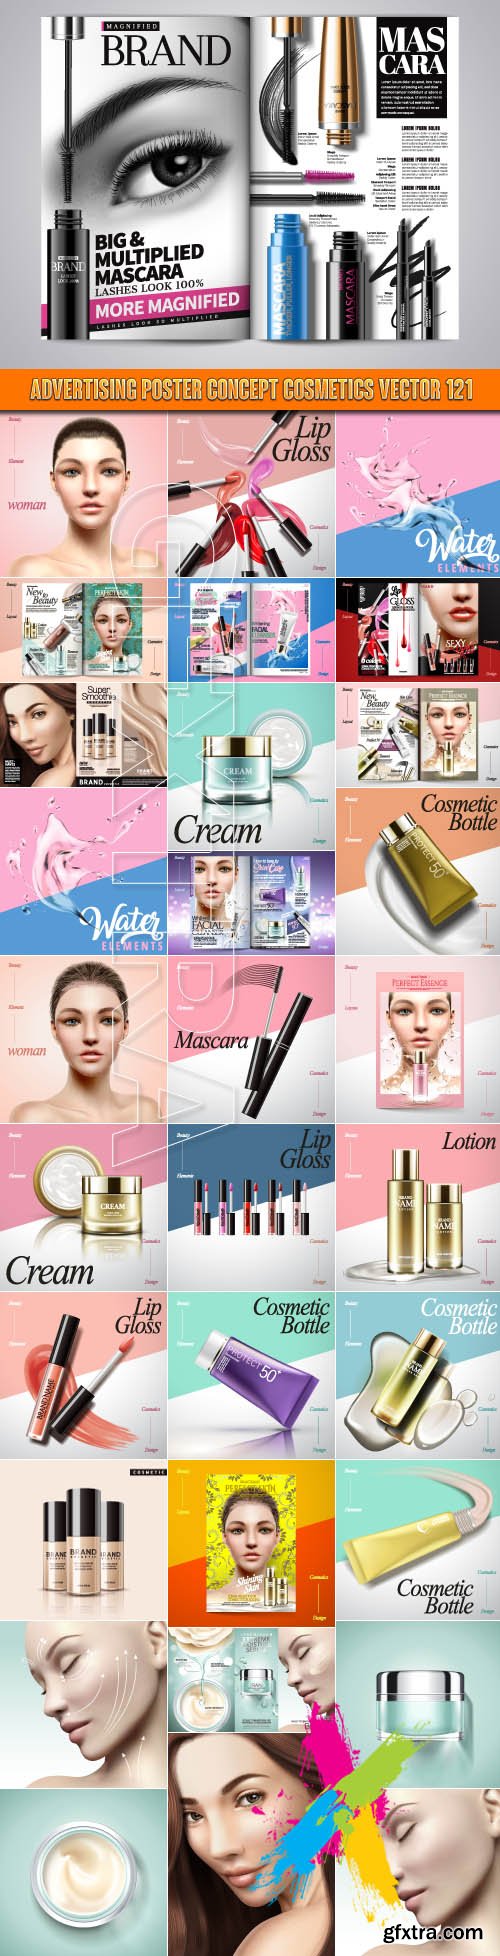 Advertising Poster Concept Cosmetics vector 121